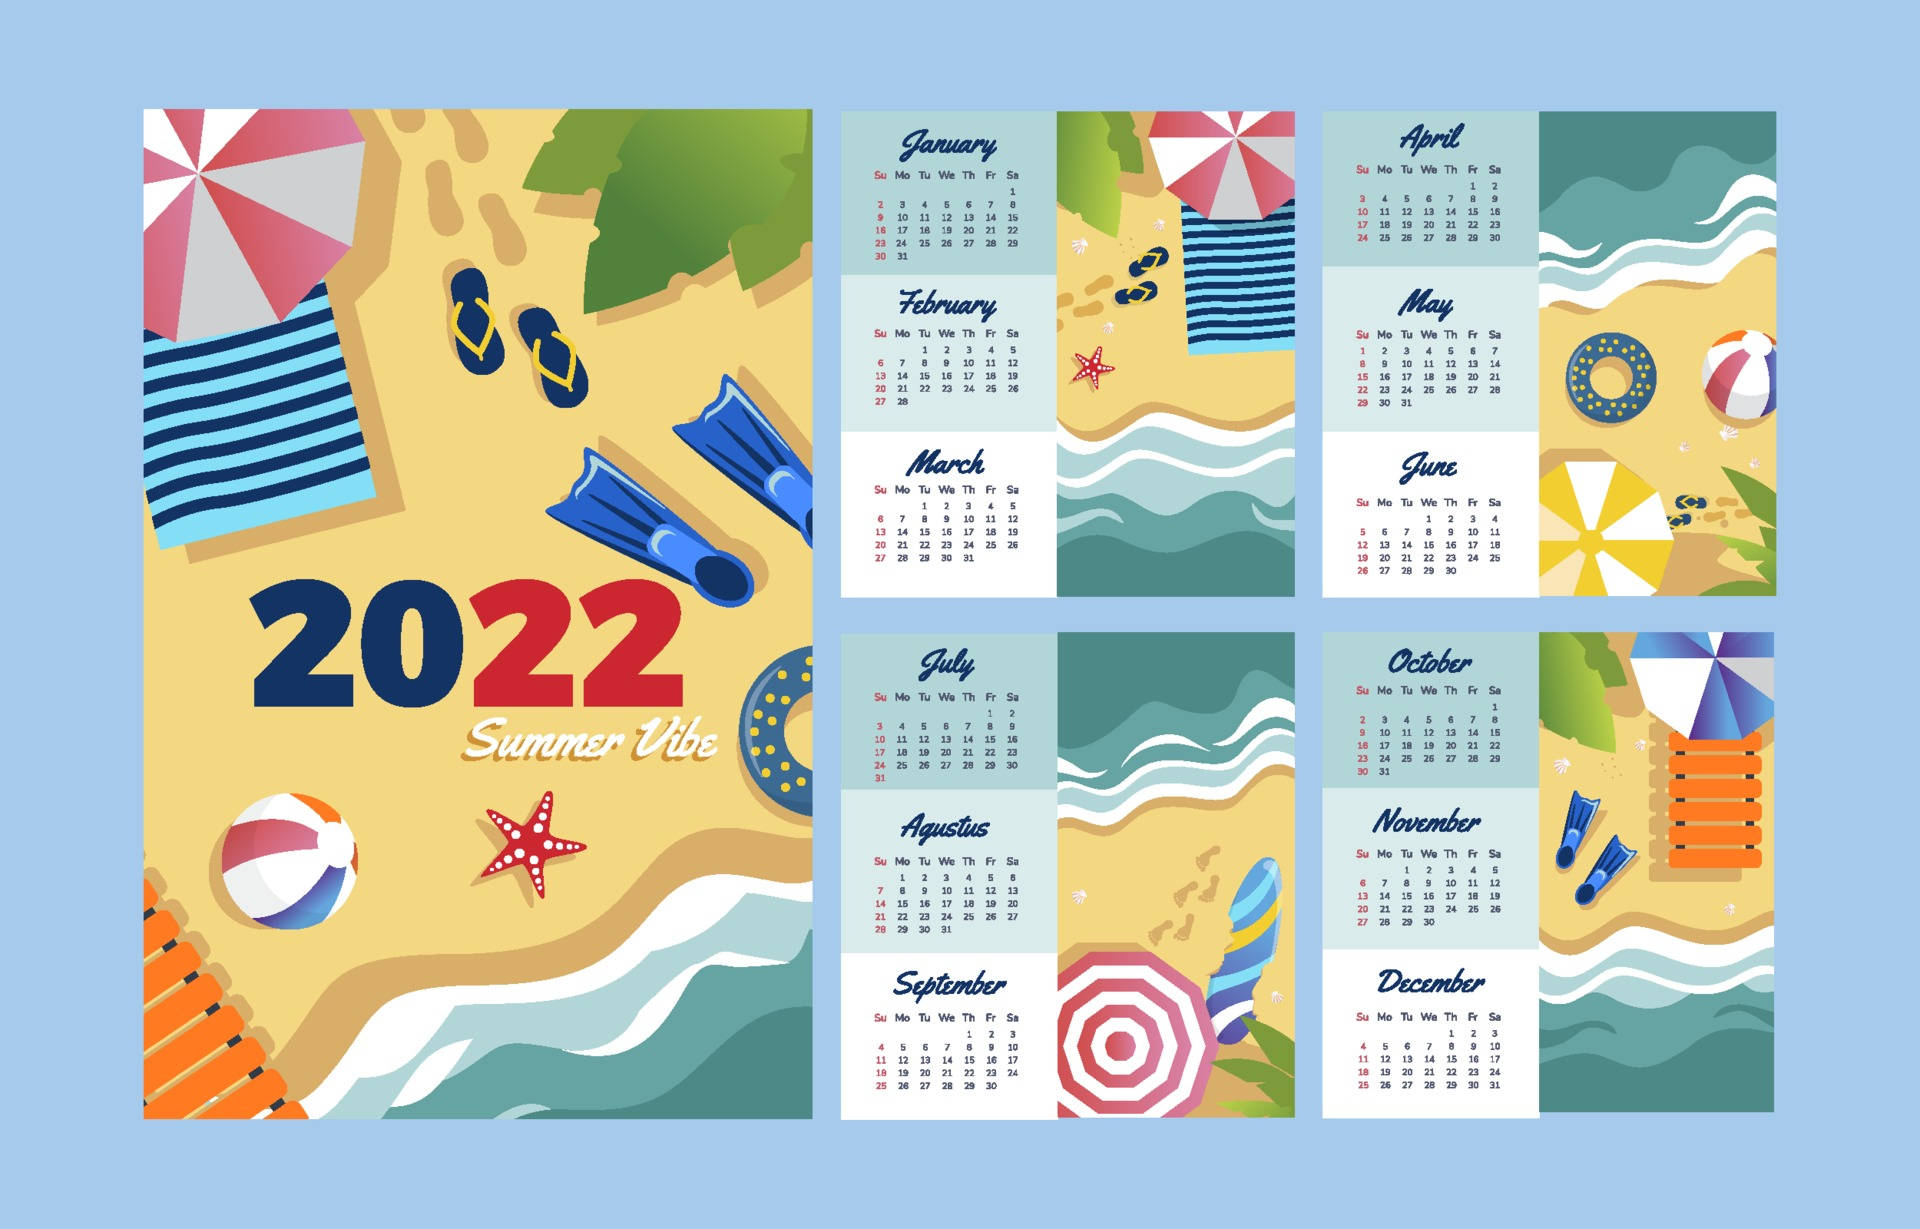 Summer Vibe 2022 Calendar Wallpaper